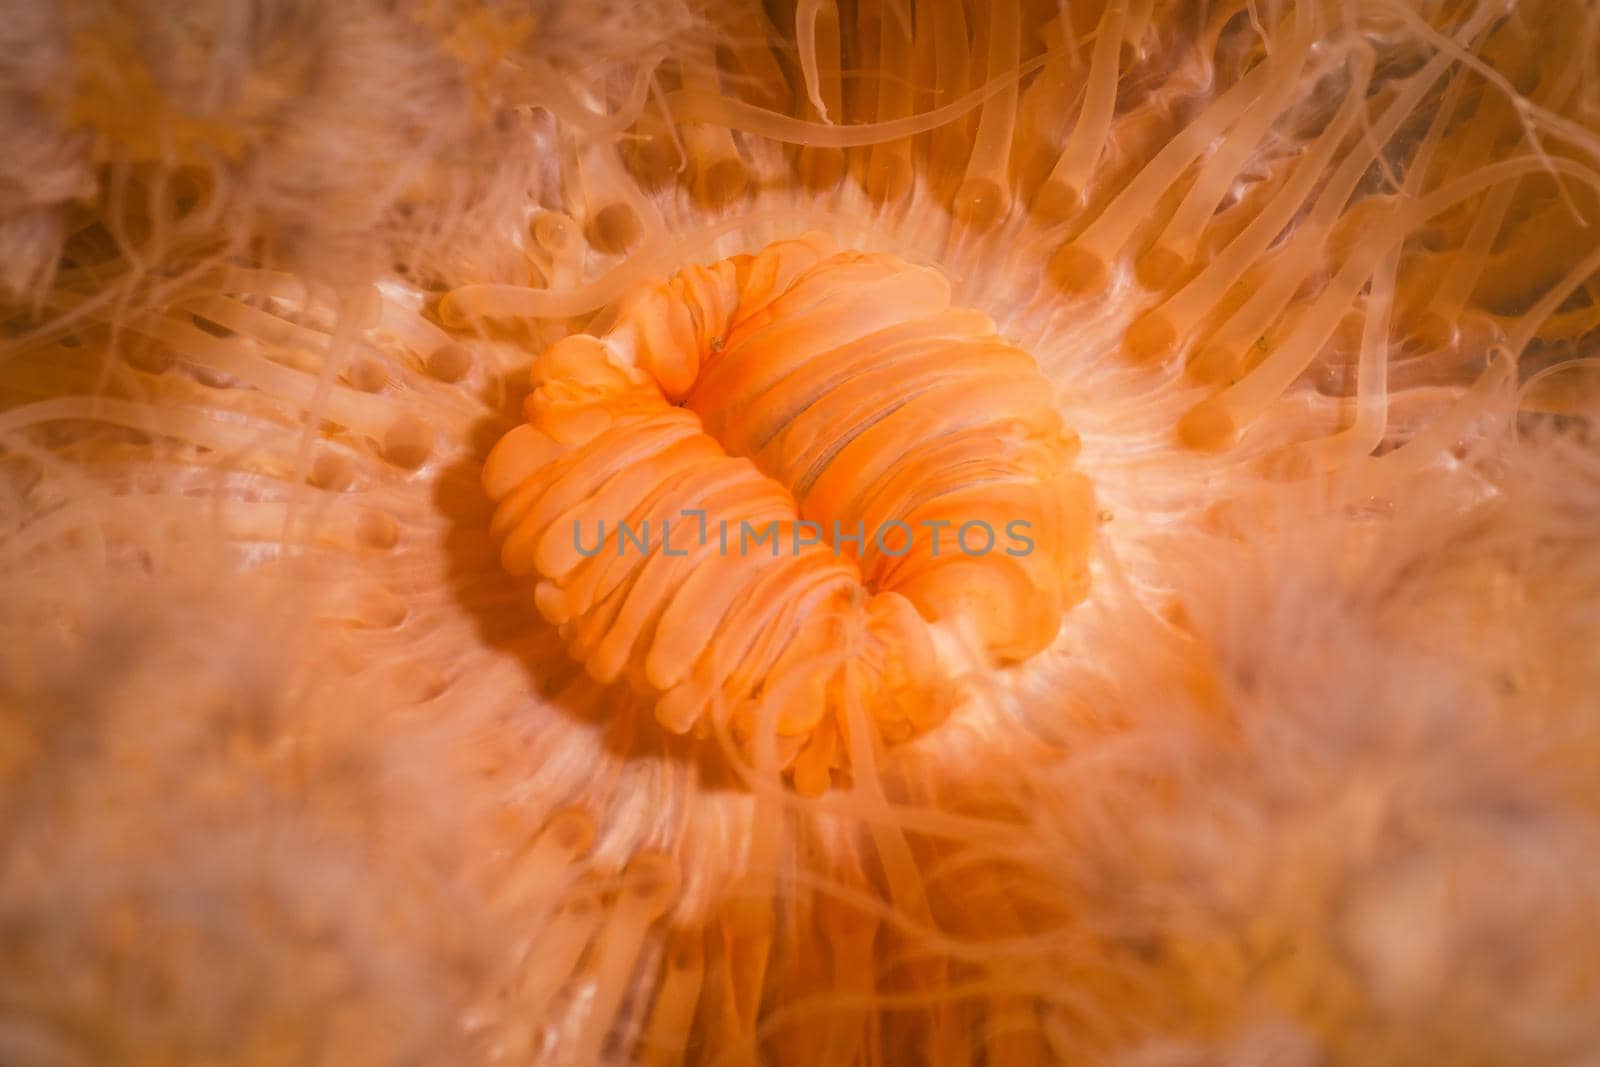 Macro Picture of Orange Plumose Anemone in Pacific Northwest Ocean by edb3_16